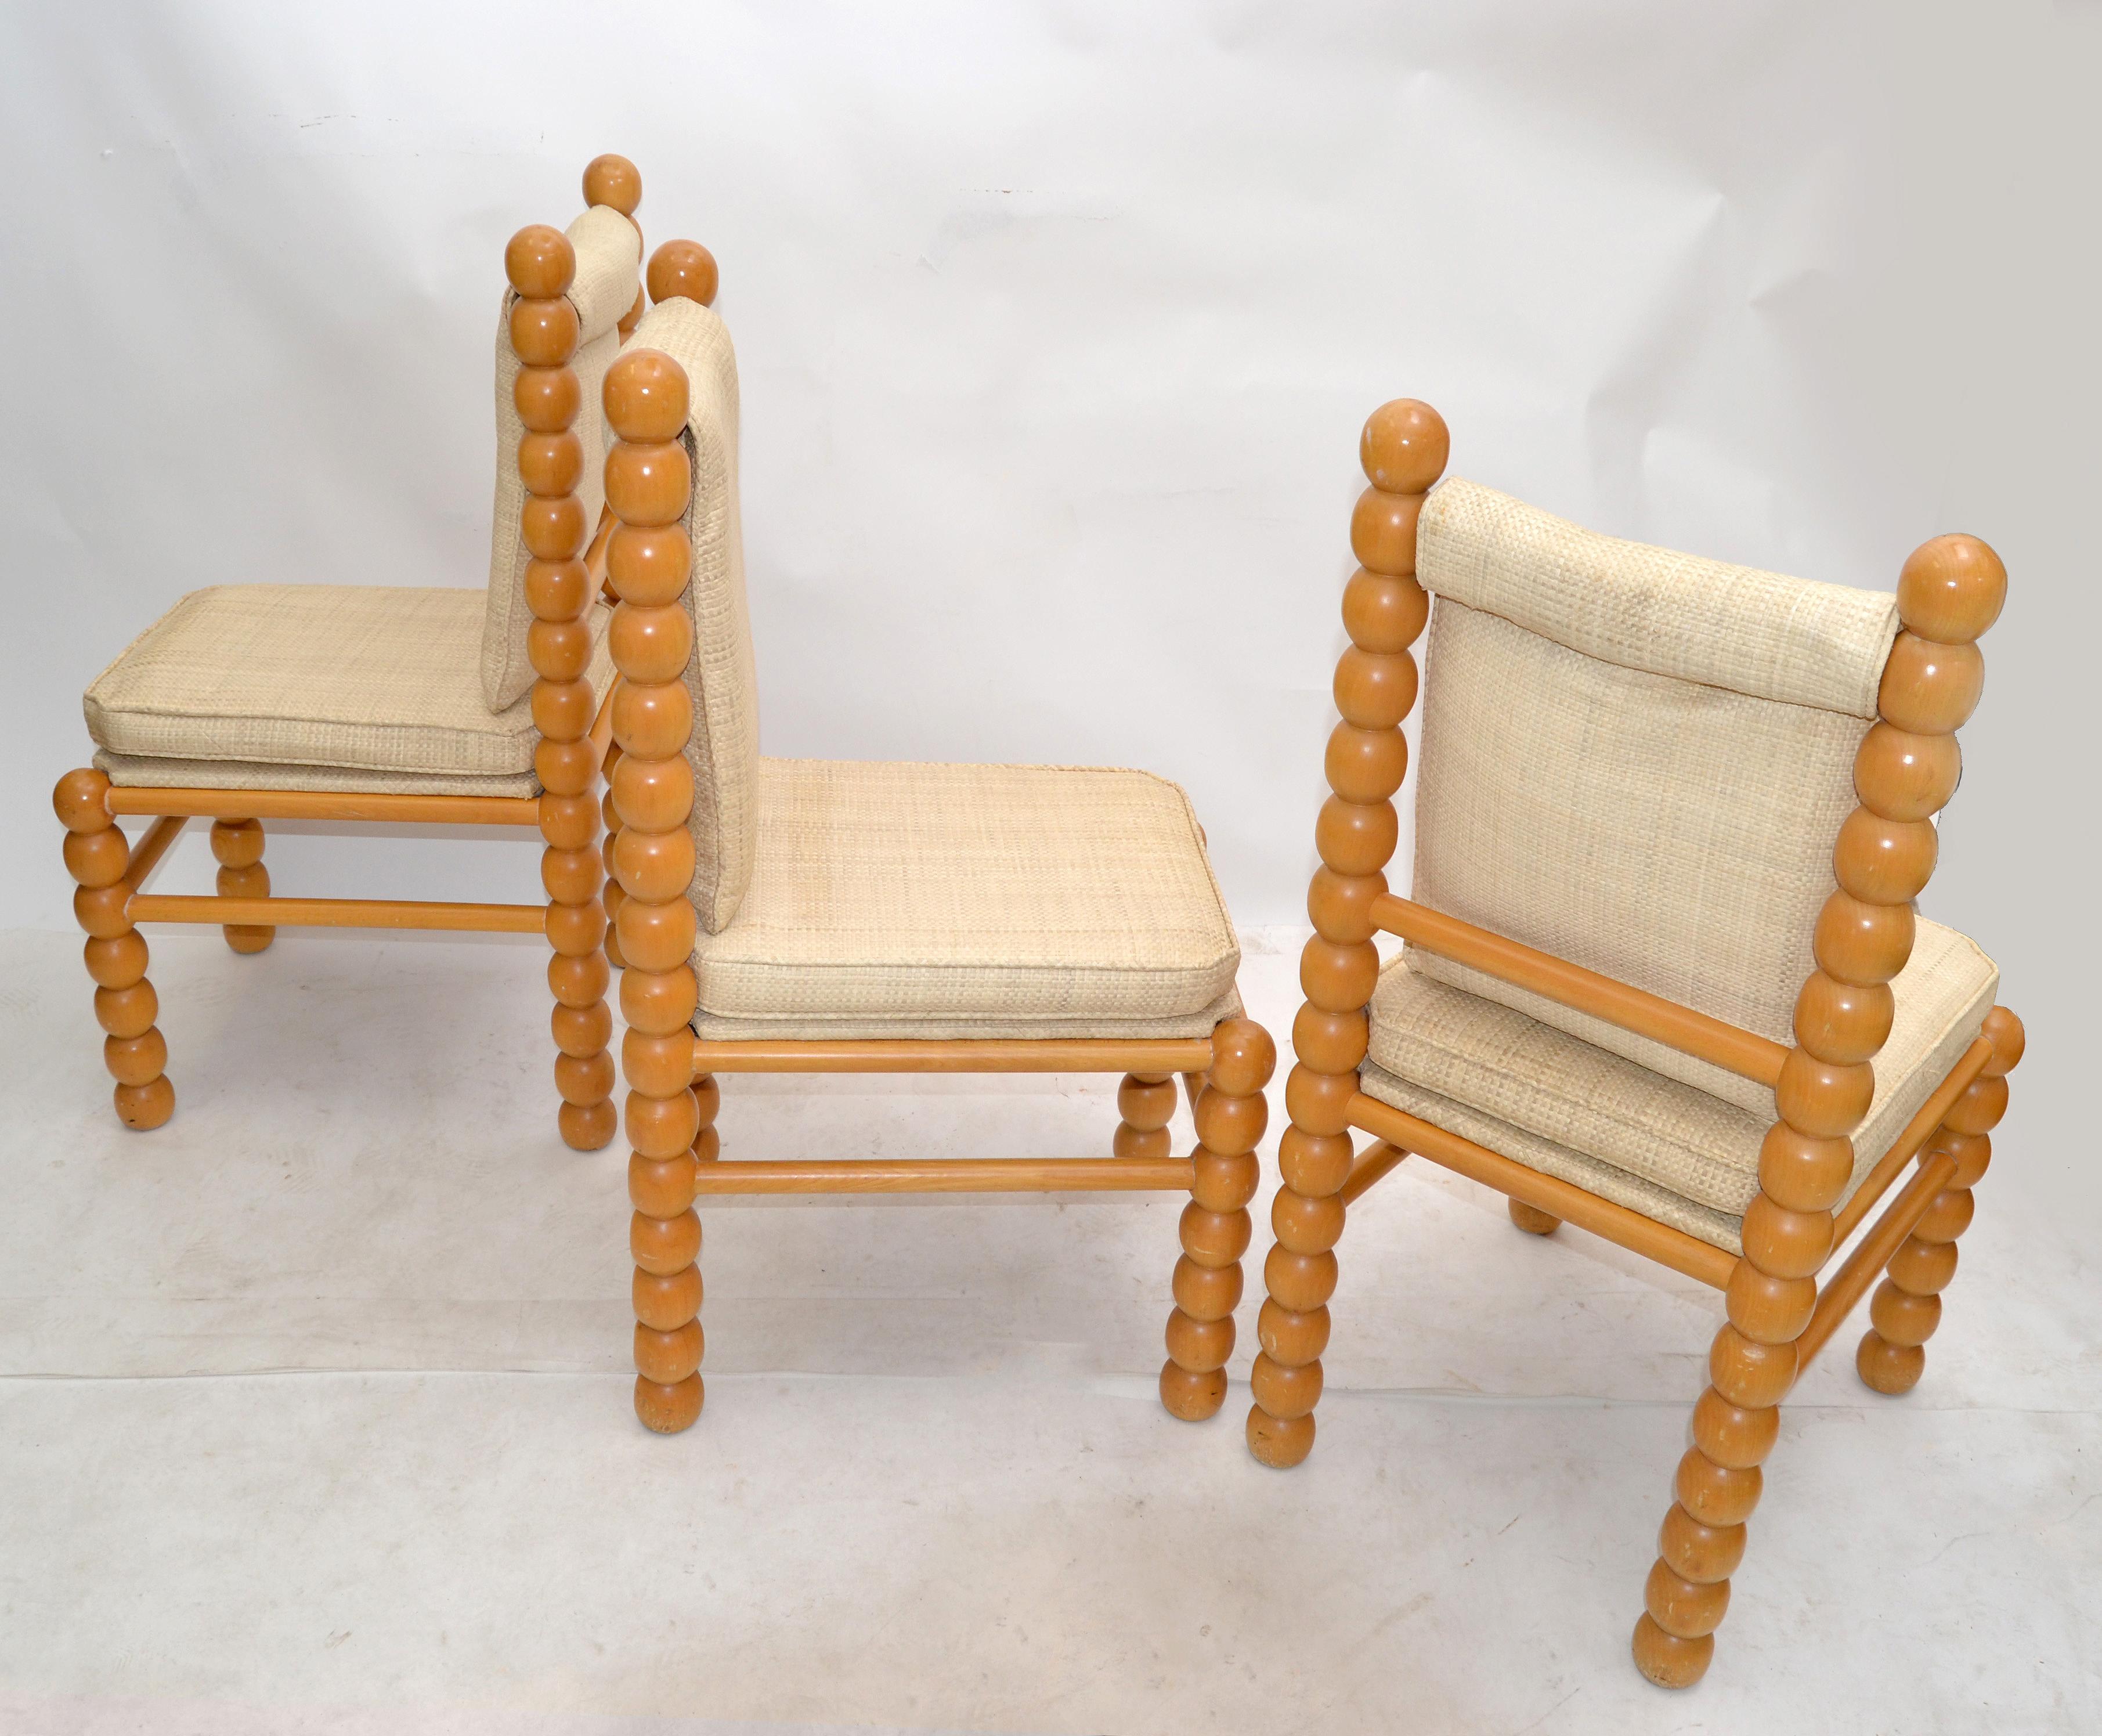 birch wood chair